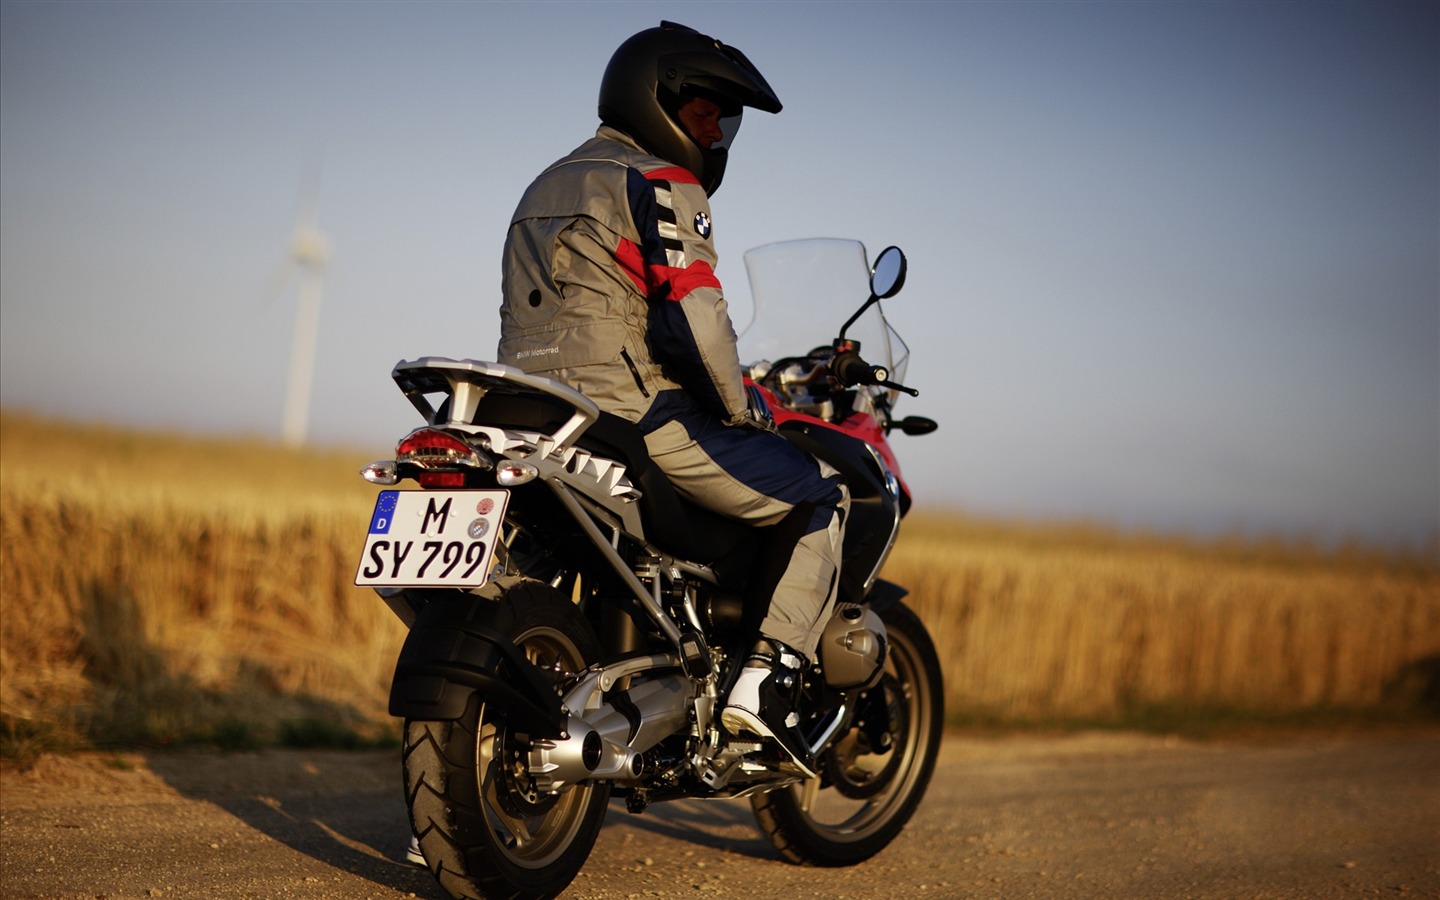 2010 fondos de pantalla de la motocicleta BMW #14 - 1440x900